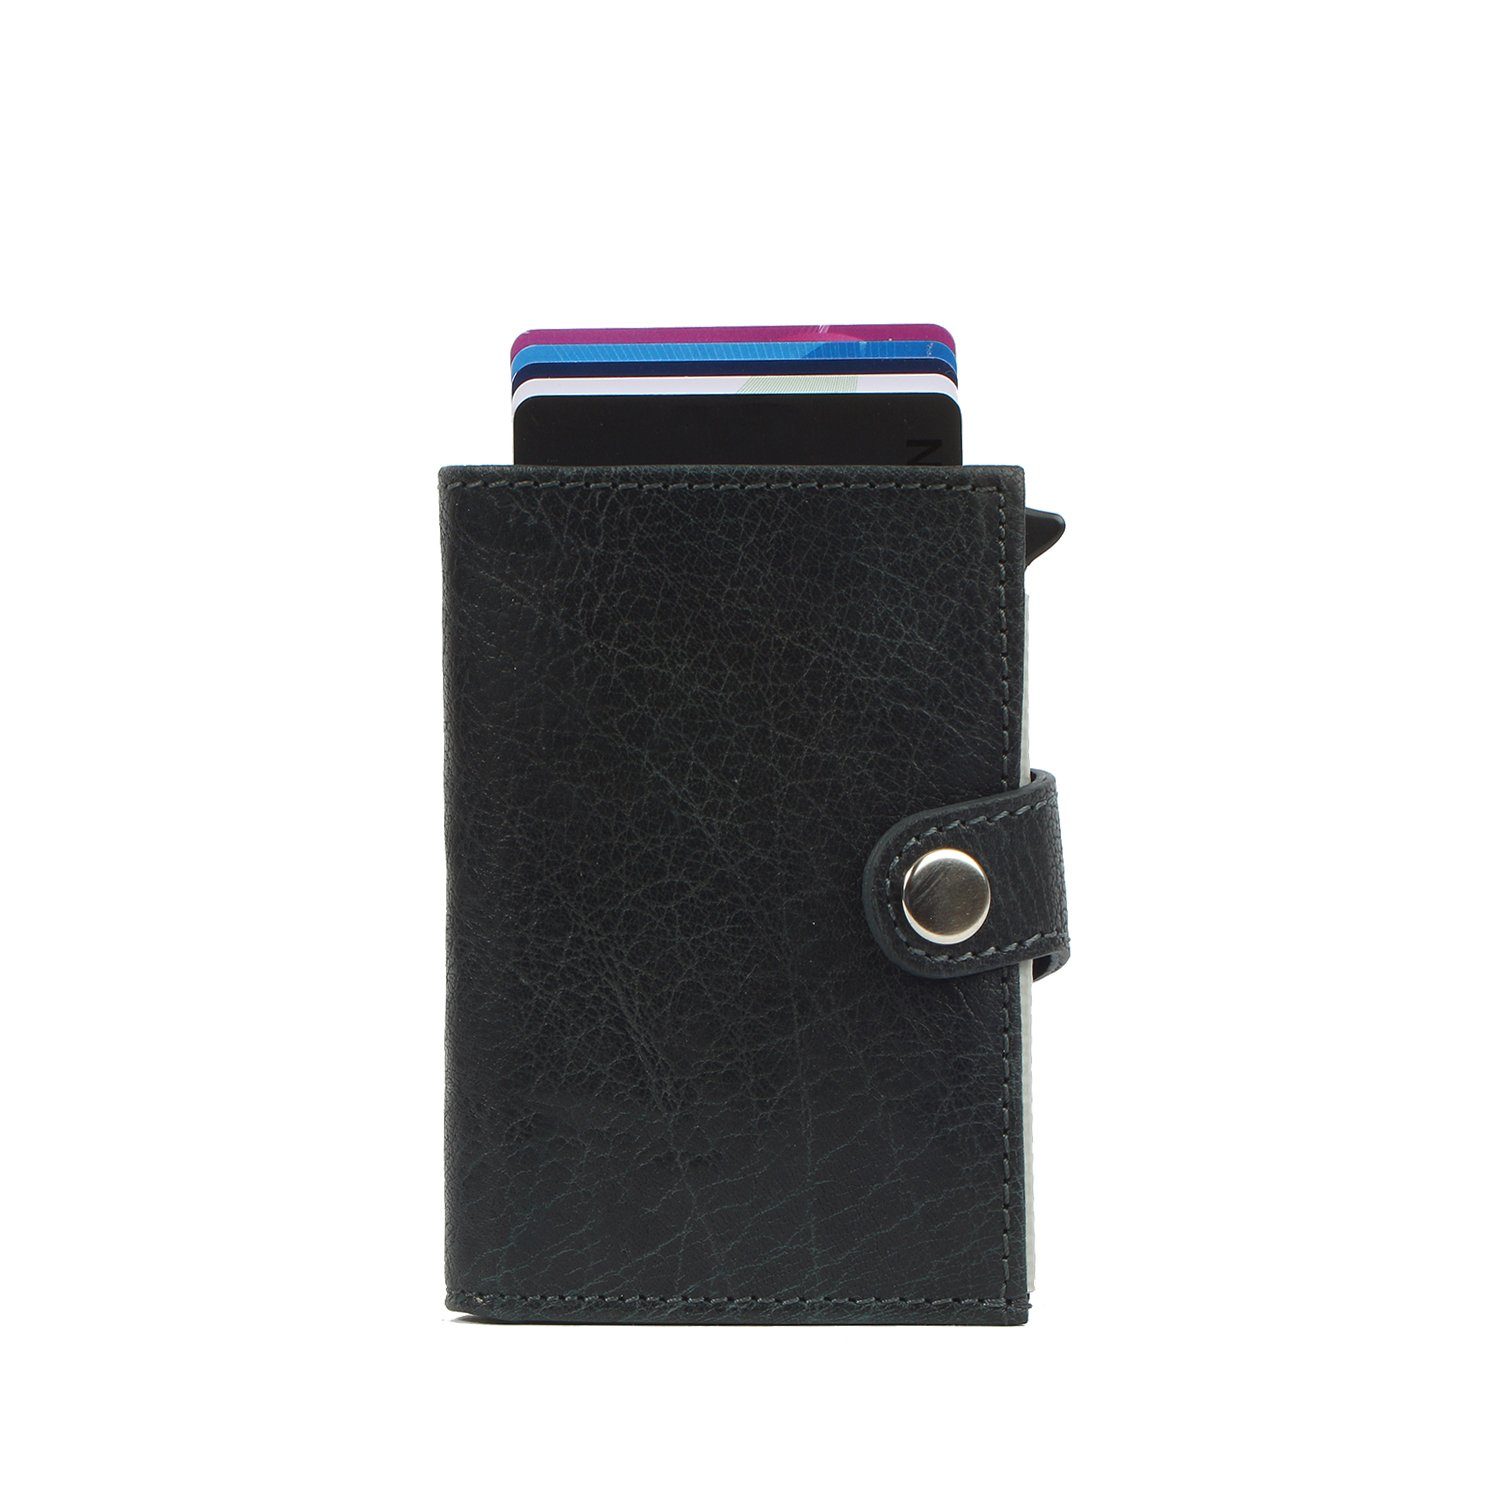 Margelisch Mini Geldbörse noonyu Kreditkartenbörse Leder steelblue Upcycling leather, aus single